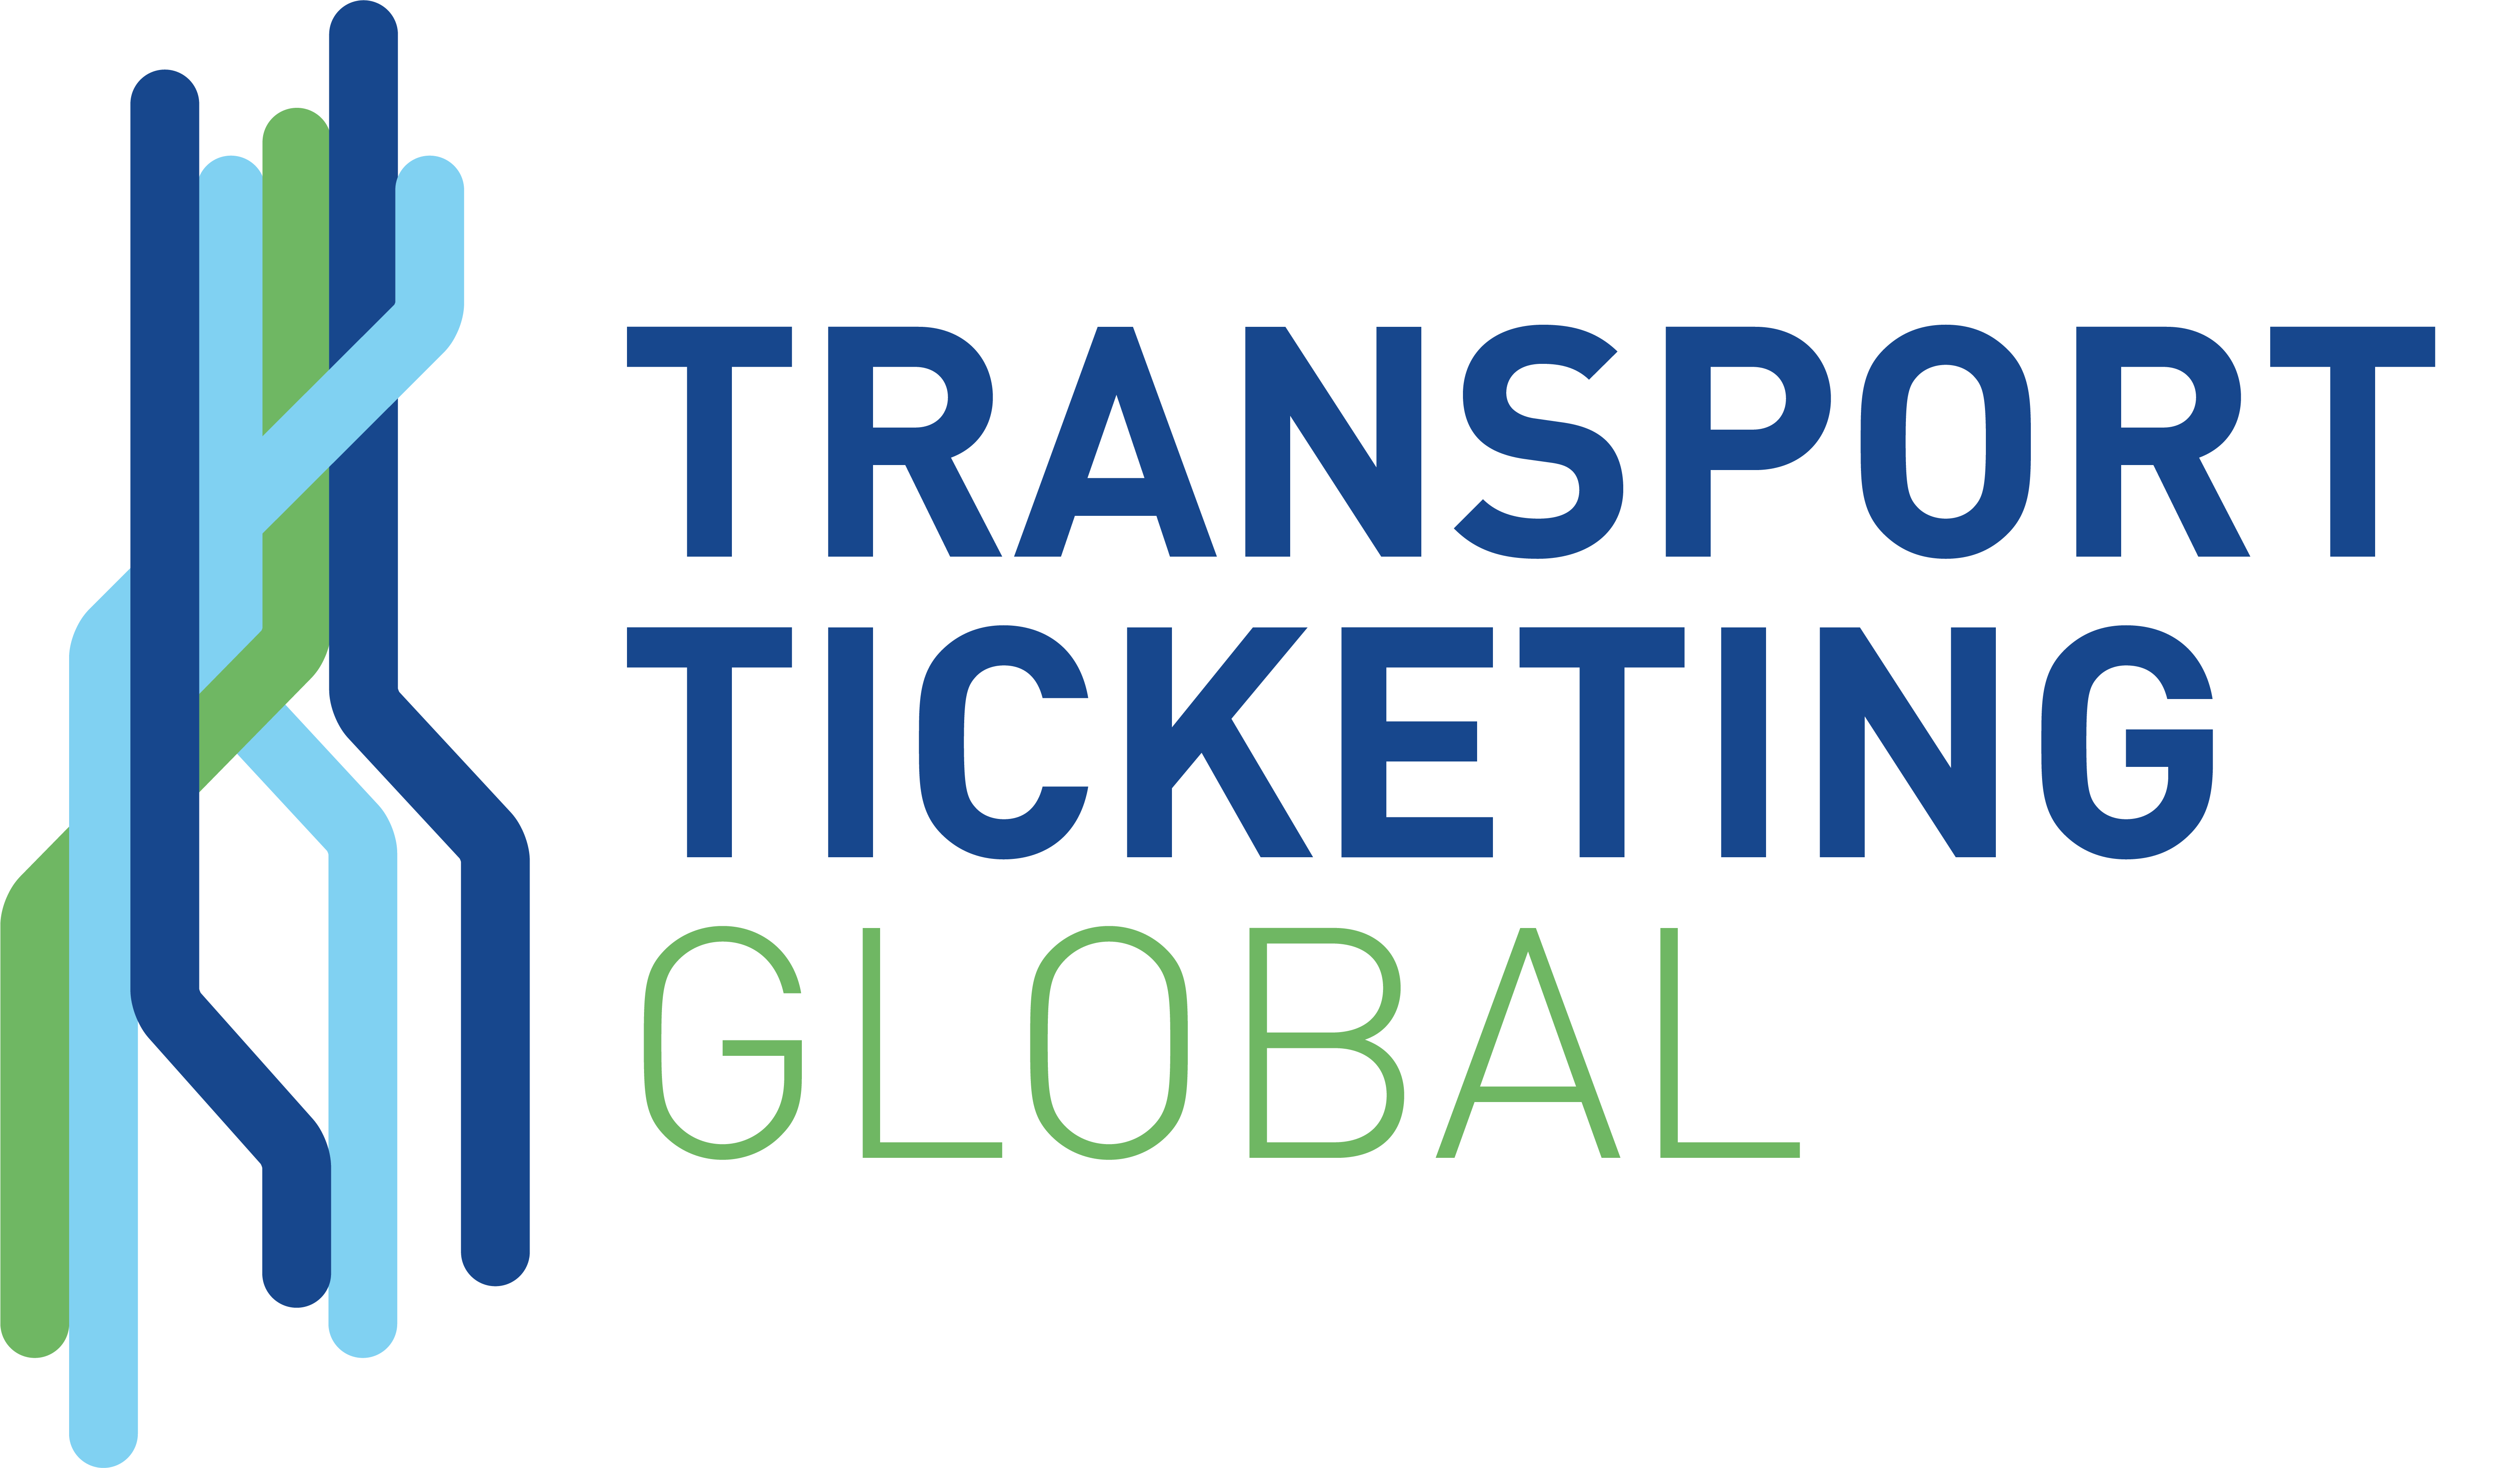 Transport ticketing Global. Transport ticketing Global 2021. Transport ticketing Award. Transport tickets. Global ticketing